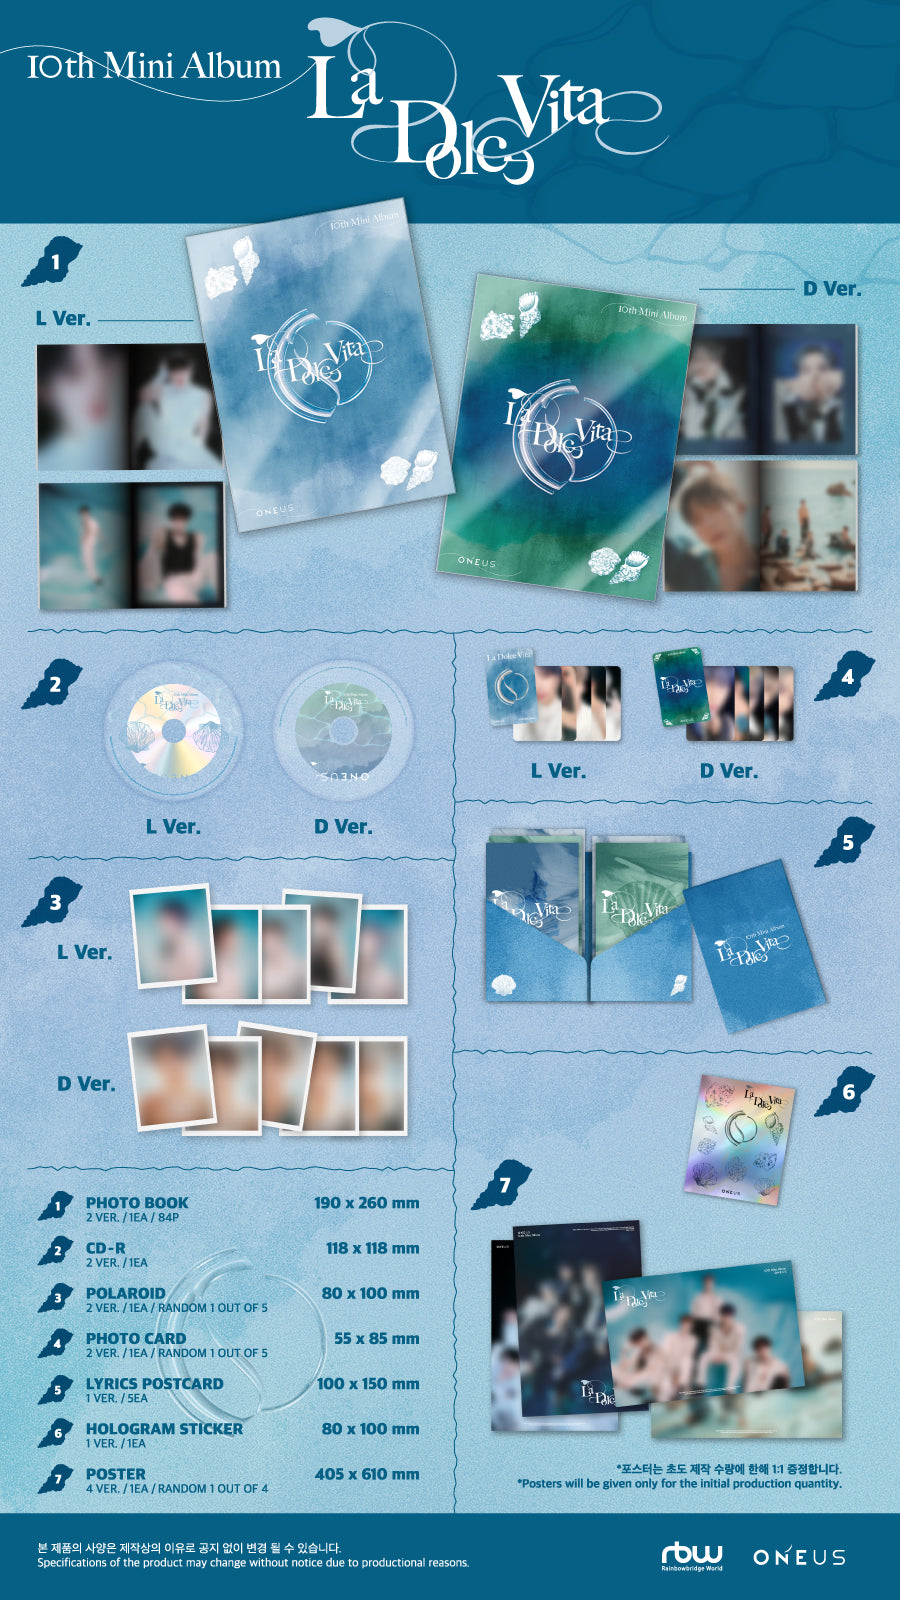 K-Pop CD Oneus - 10th Mini Album 'La Dolce Vita'